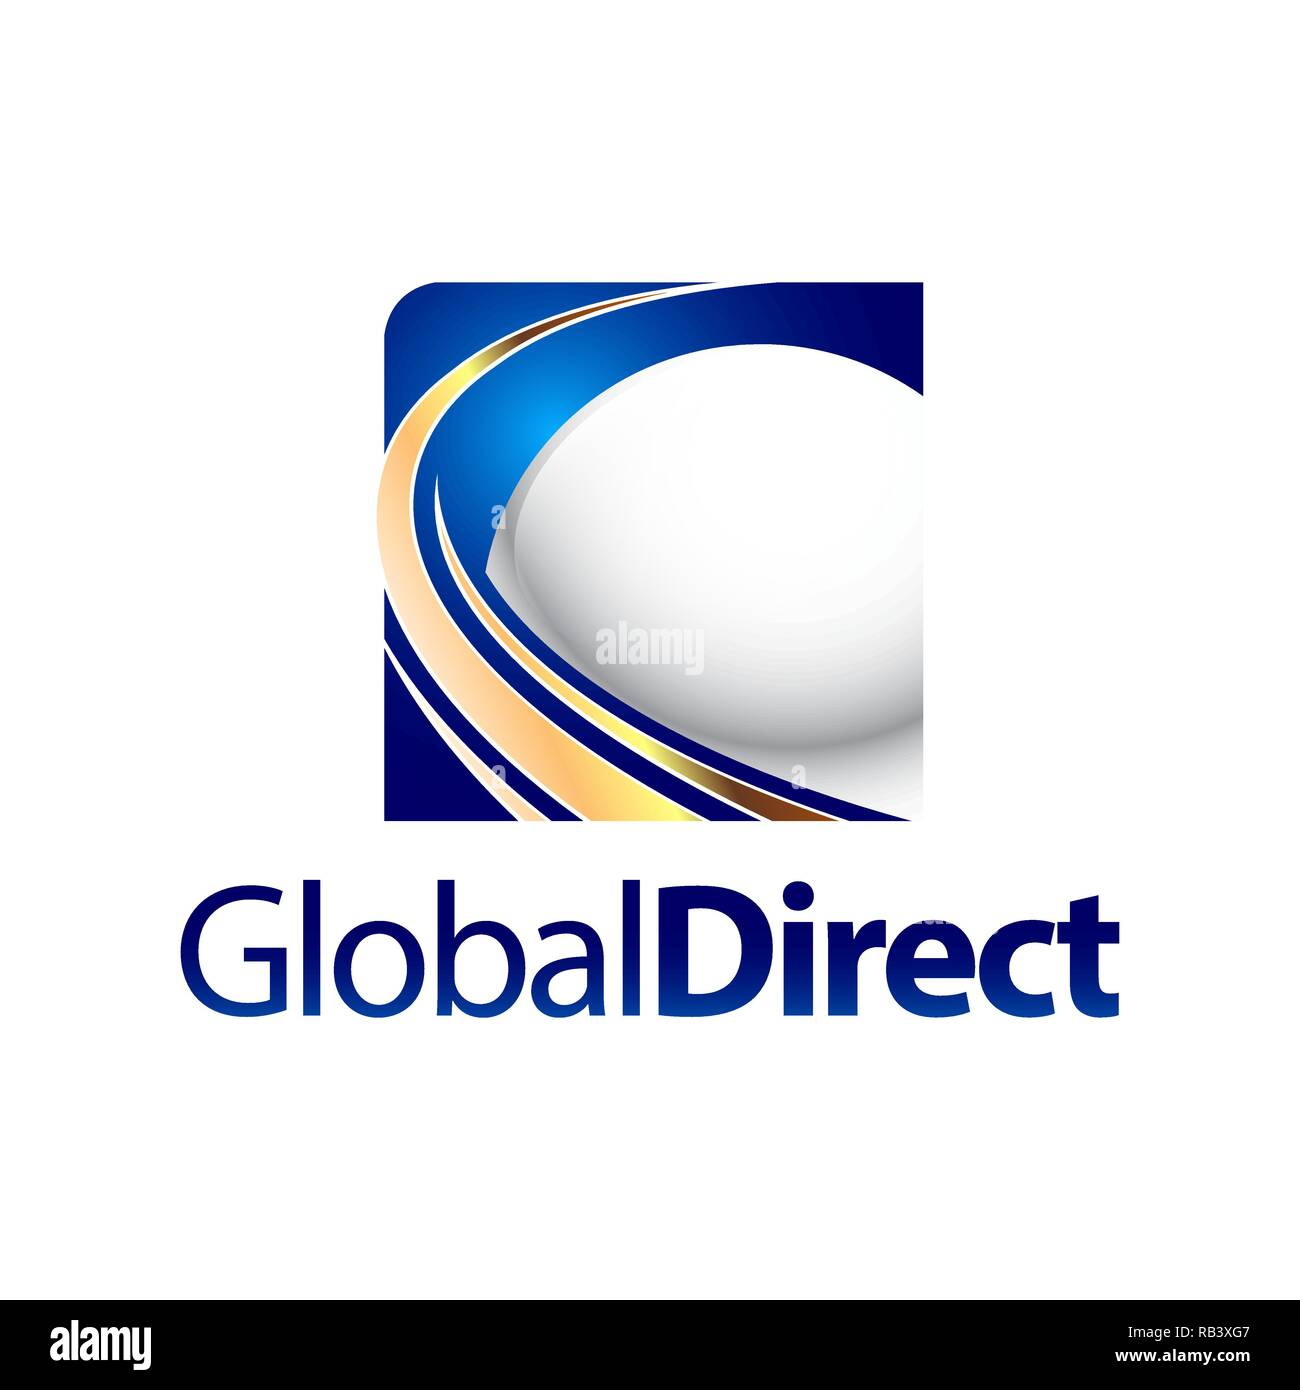 Technology Global direct square sphere logo concept design template idea Stock Vector